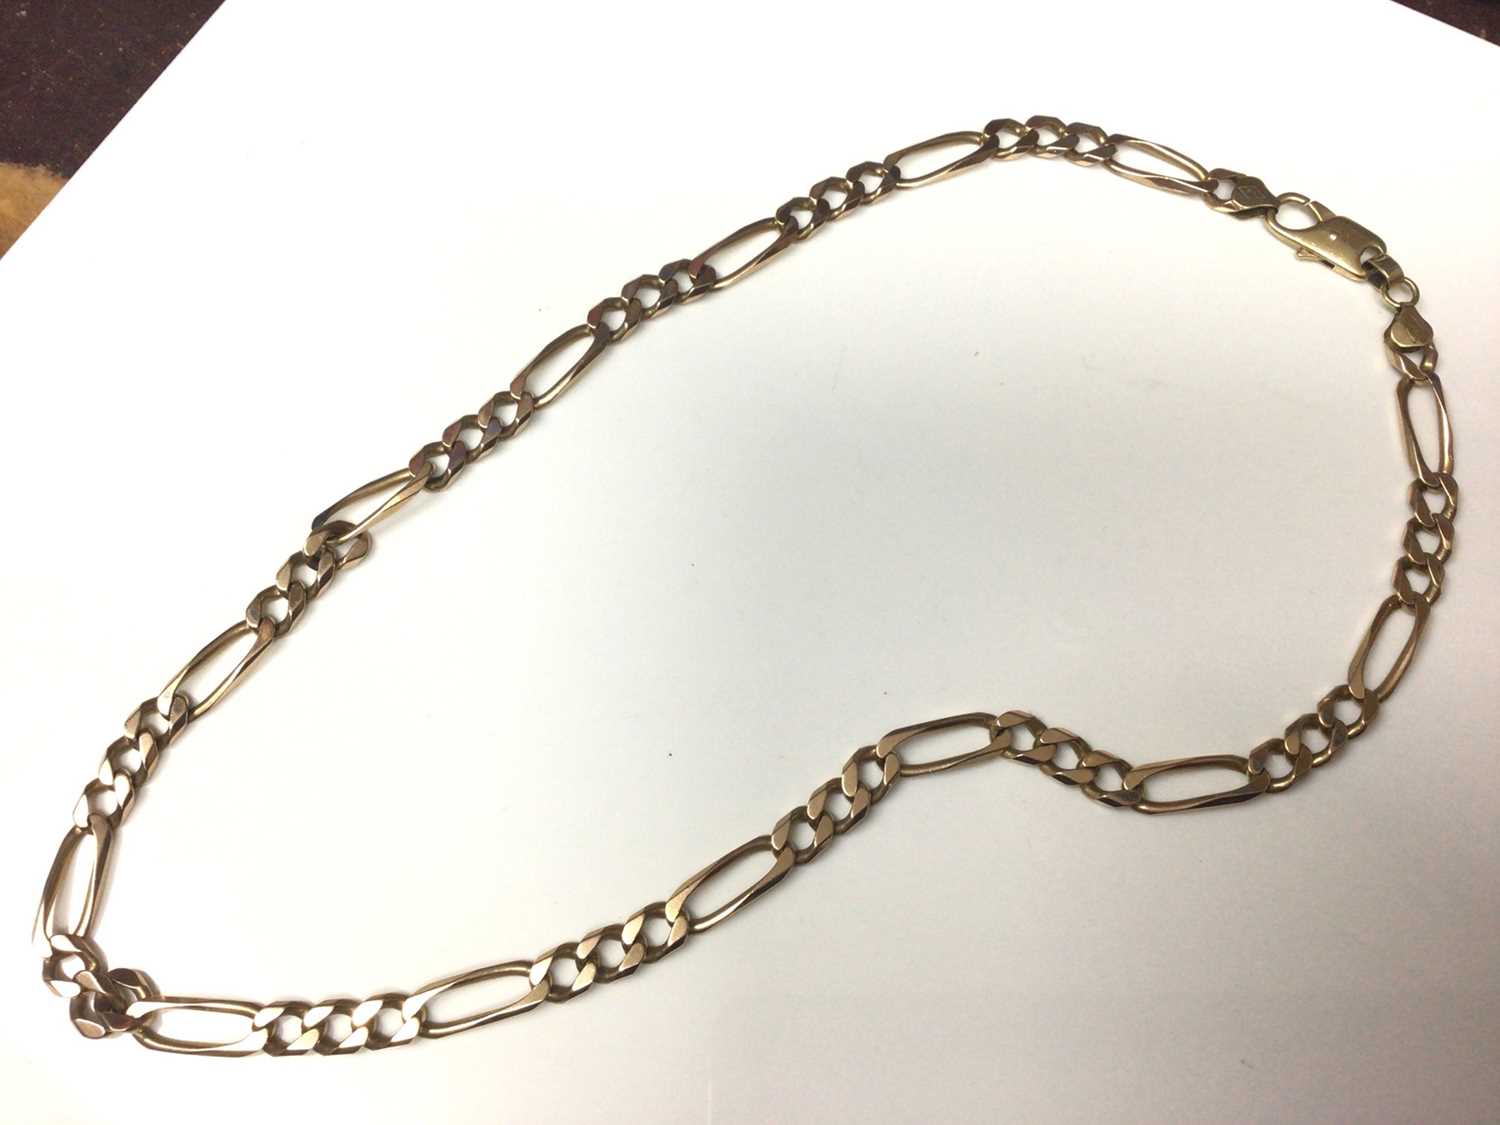 Lot 158 - 9ct gold flat curb link chain, 60cm long